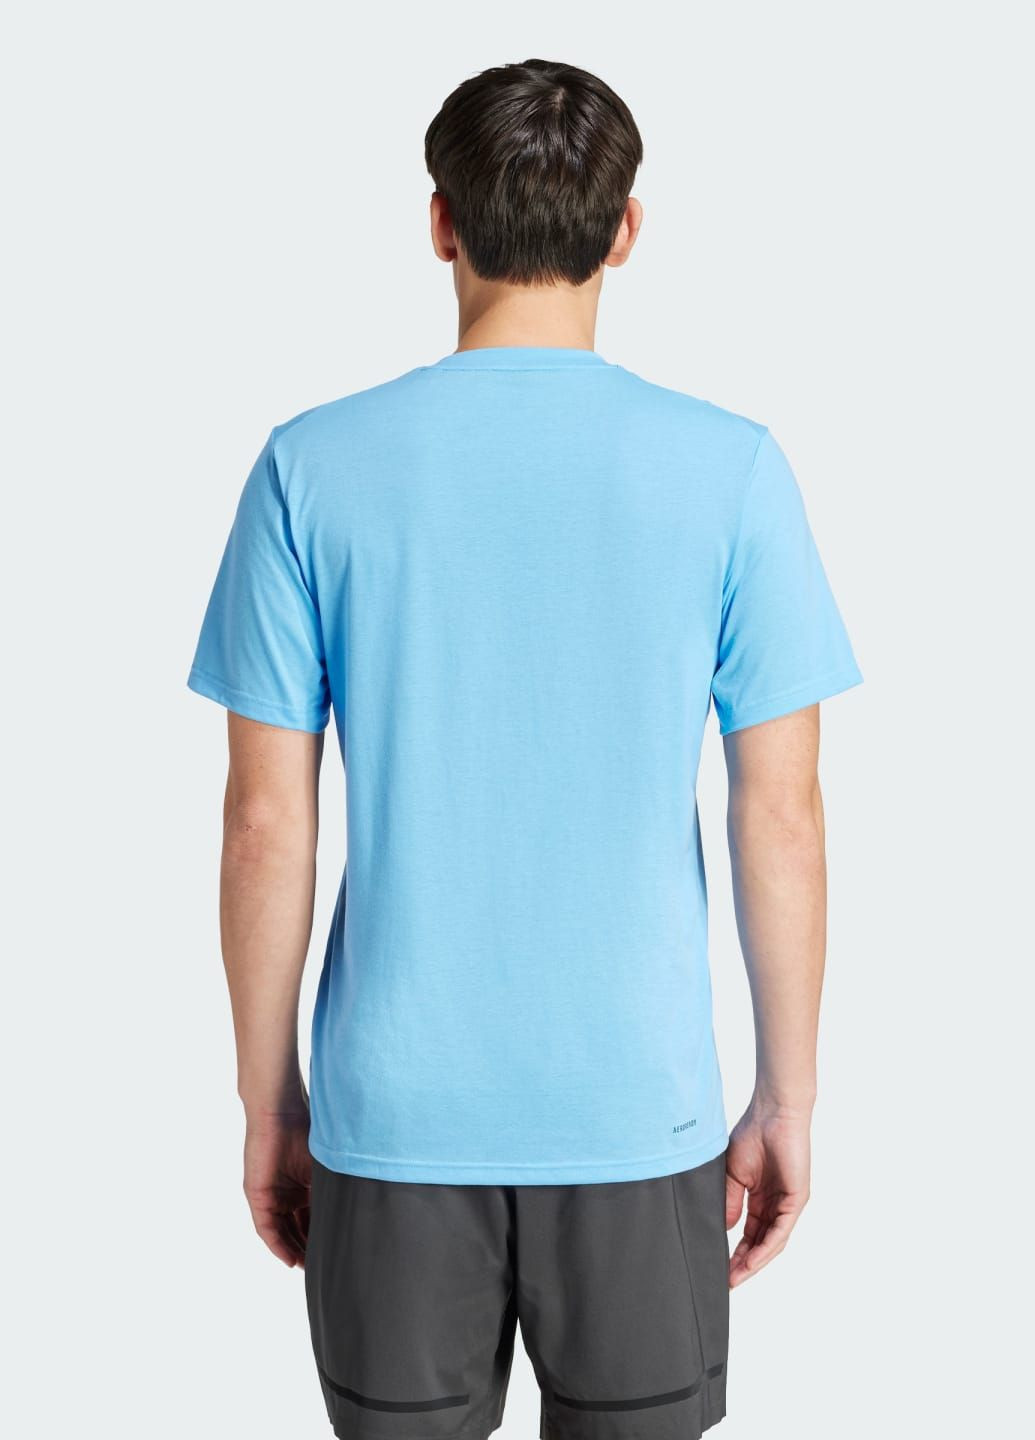 Синяя футболка для тренировок train essentials feelready adidas